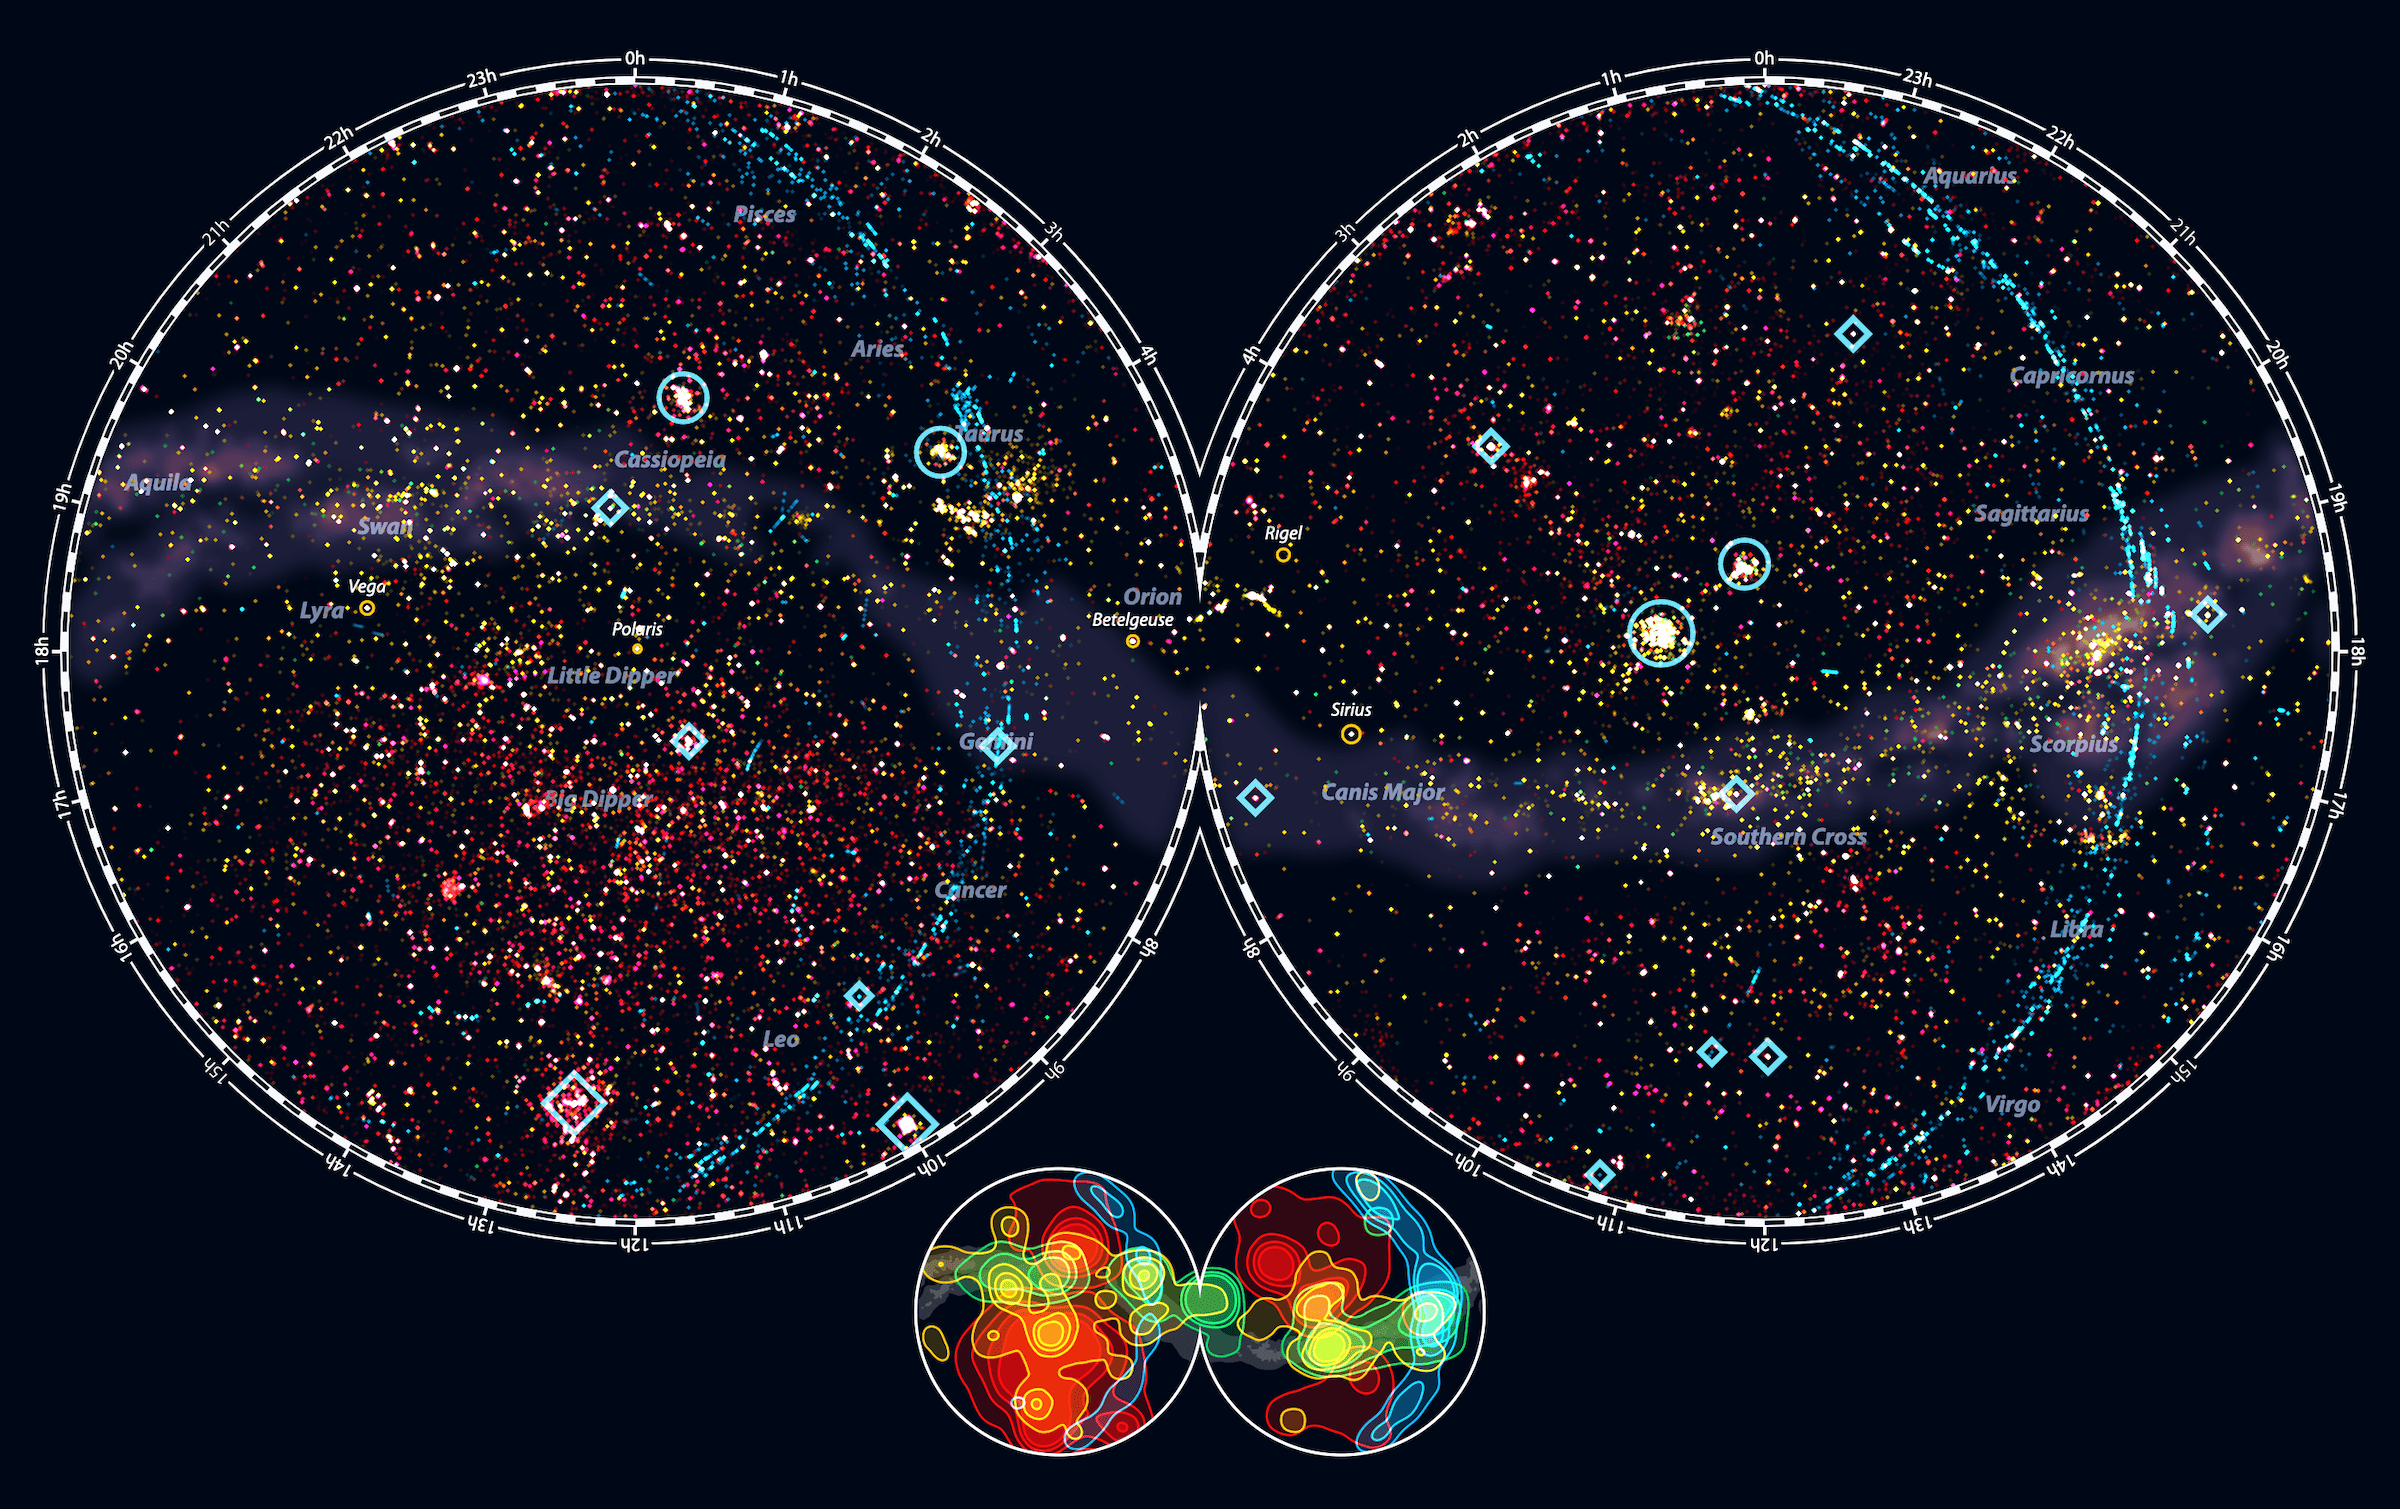 Werkloos uniek Tot ziens A sky map of the Hubble Space Telescope's observations | Visual Cinnamon